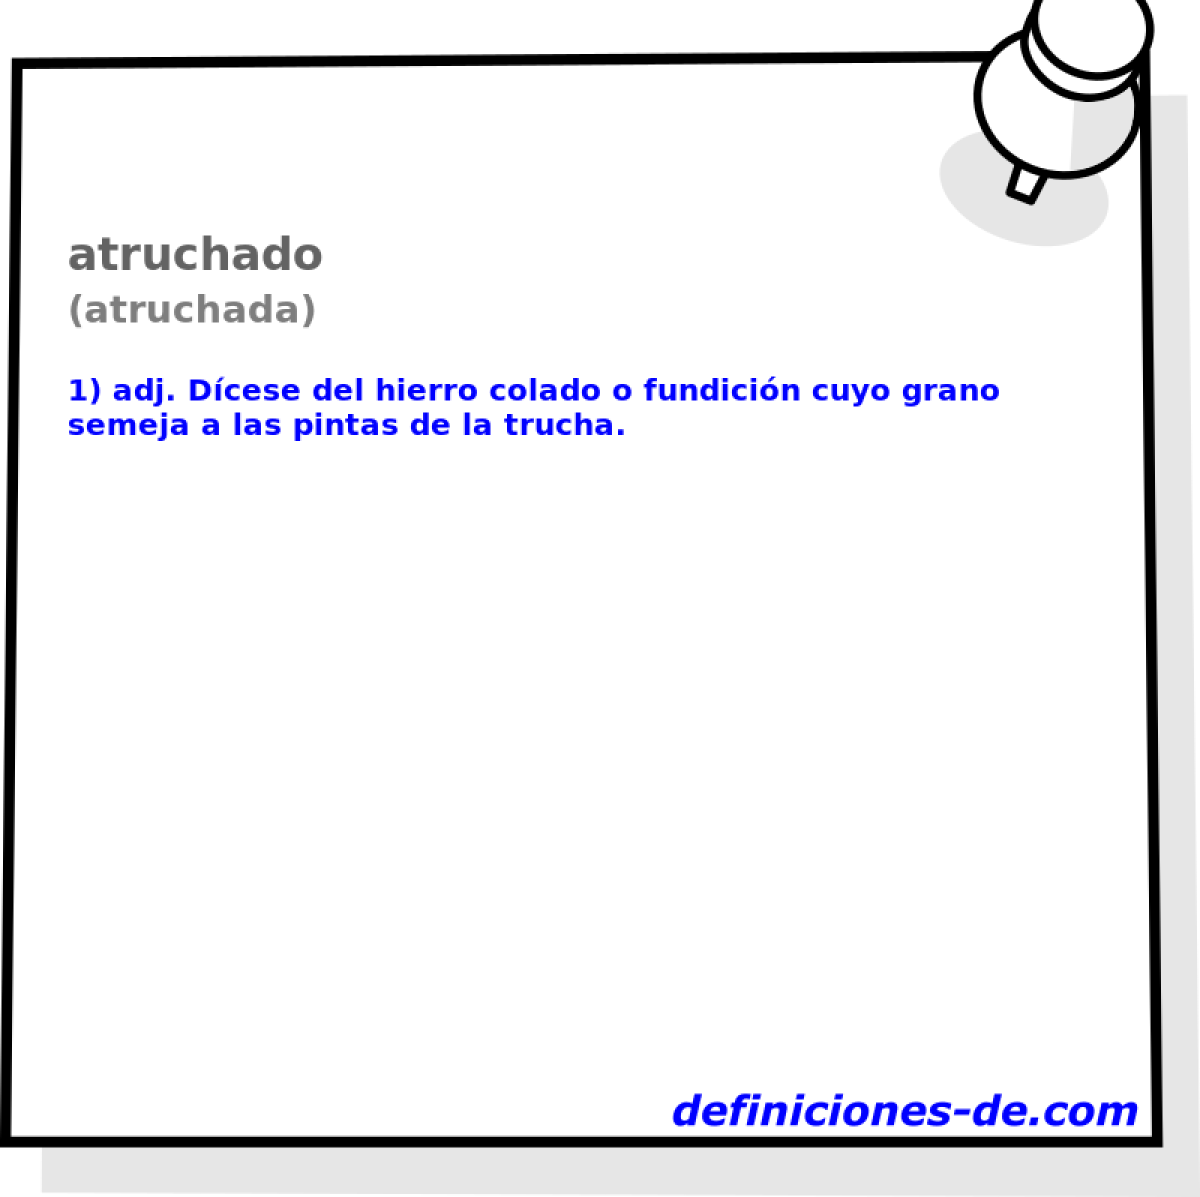 atruchado (atruchada)